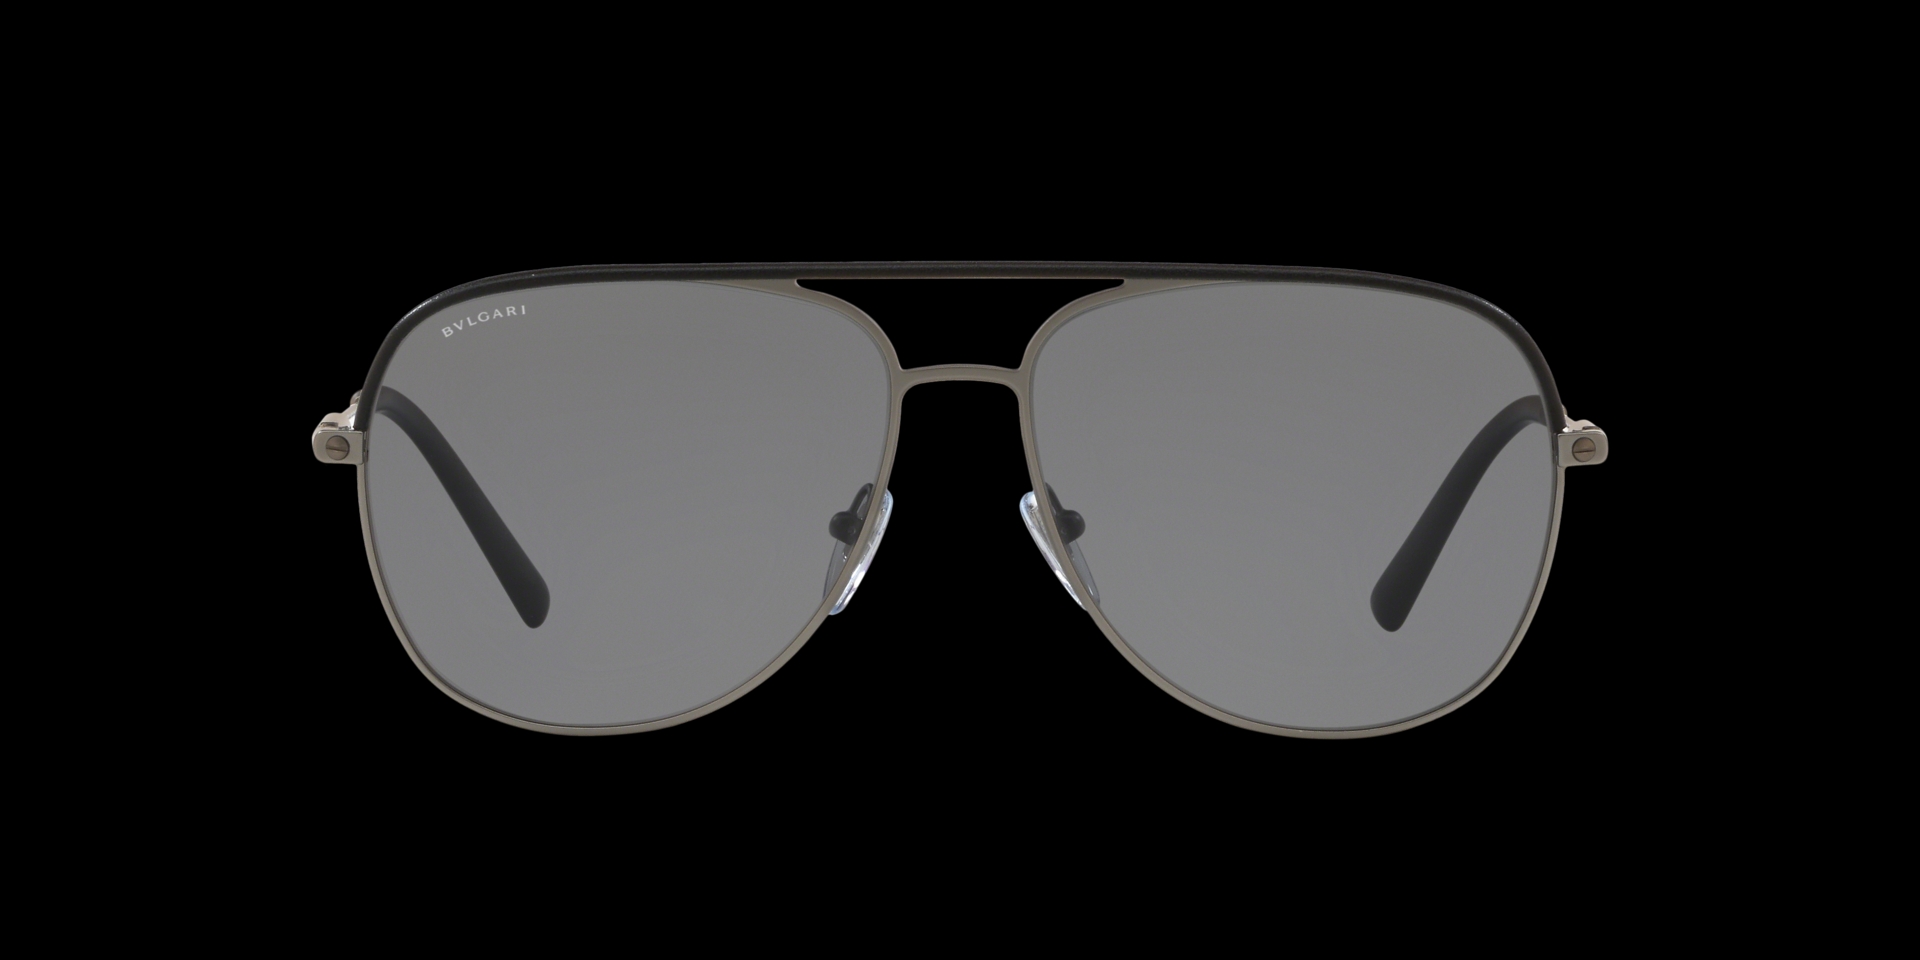 Top more than 75 bvlgari white sunglasses latest